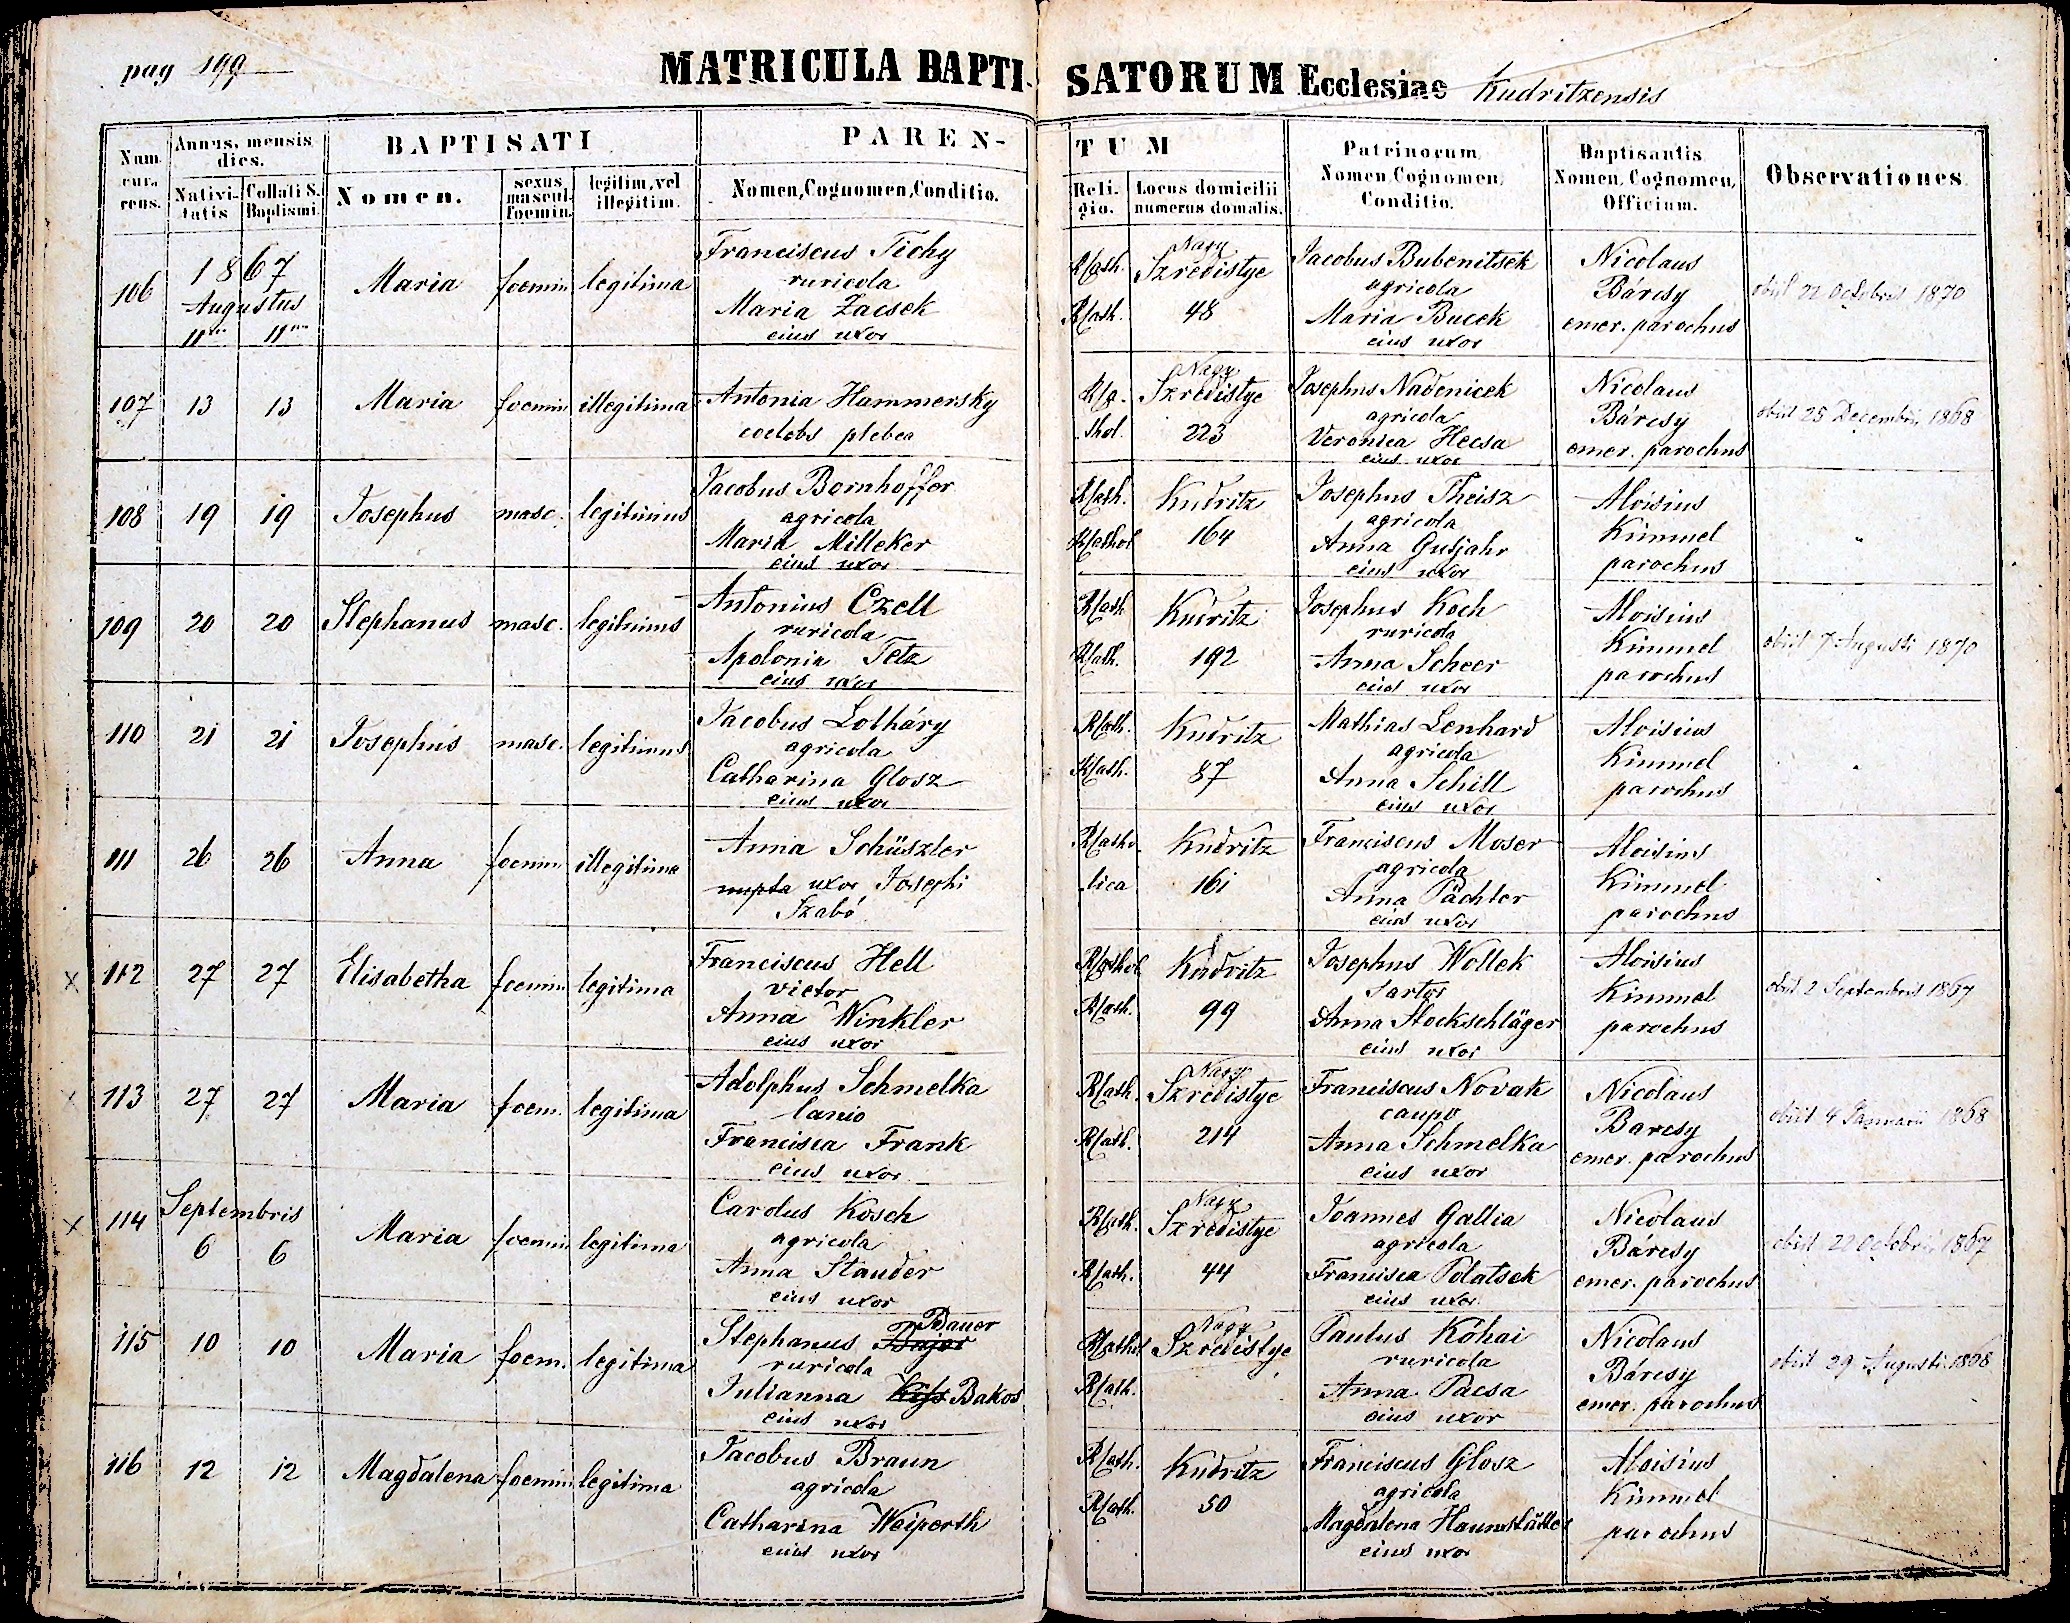 images/church_records/BIRTHS/1852-1870B/199